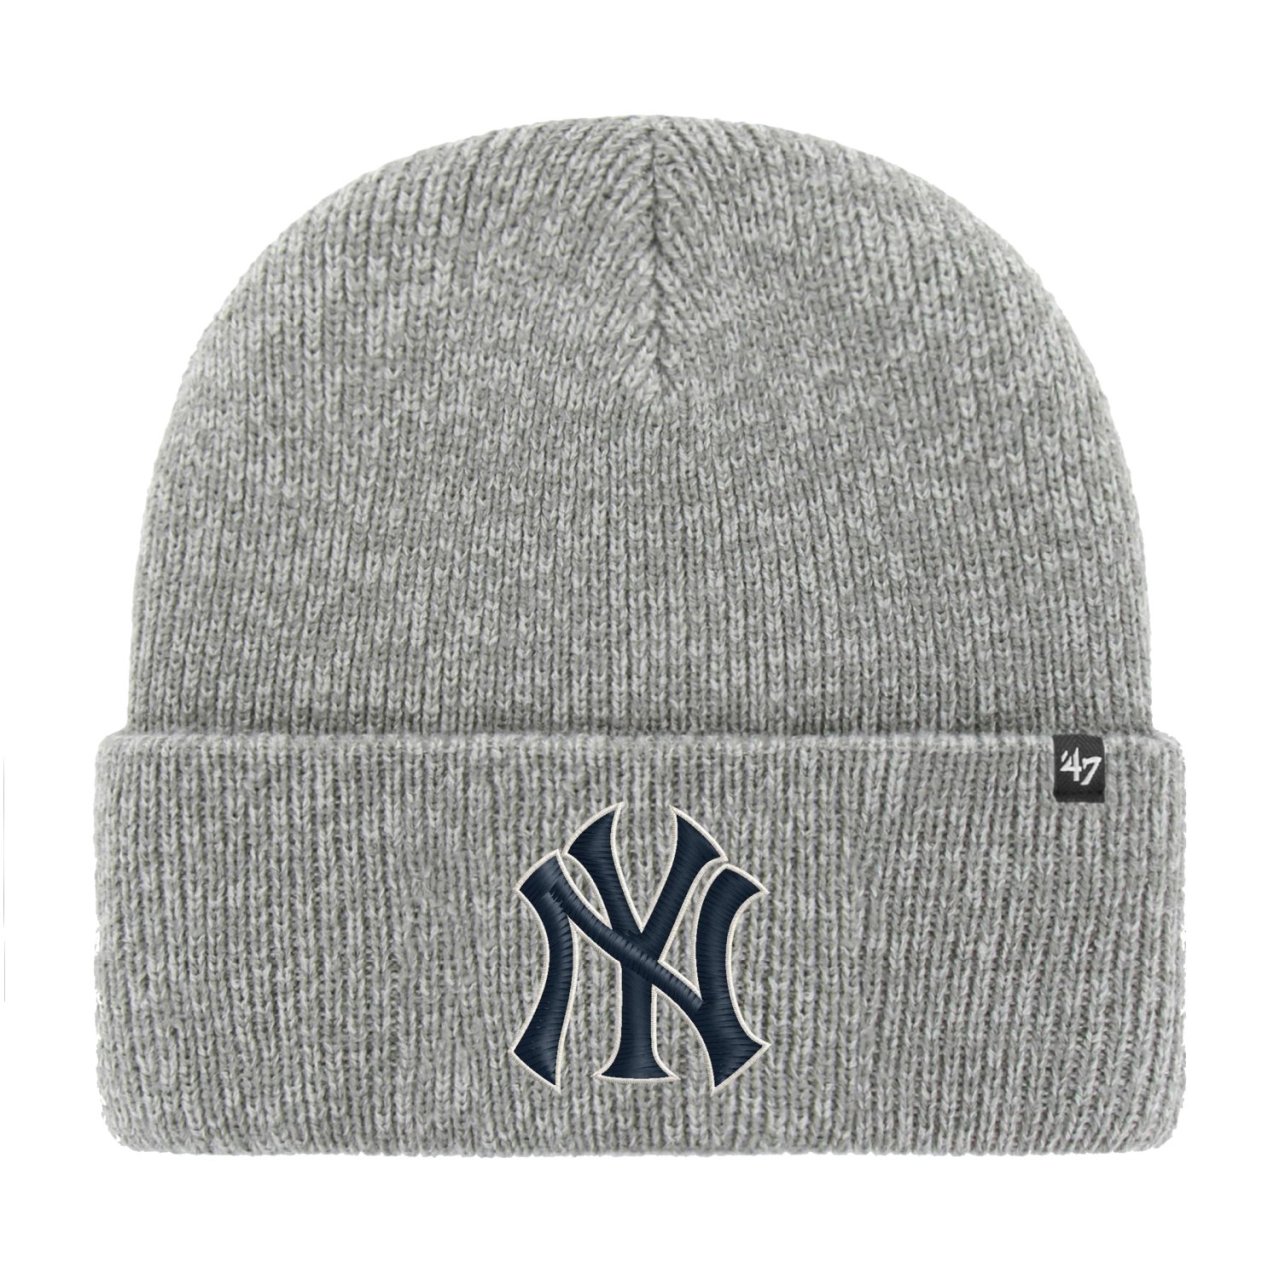 47 Brand Knit Beanie - Freeze New York Yankees grey | Men's | Beanies ...